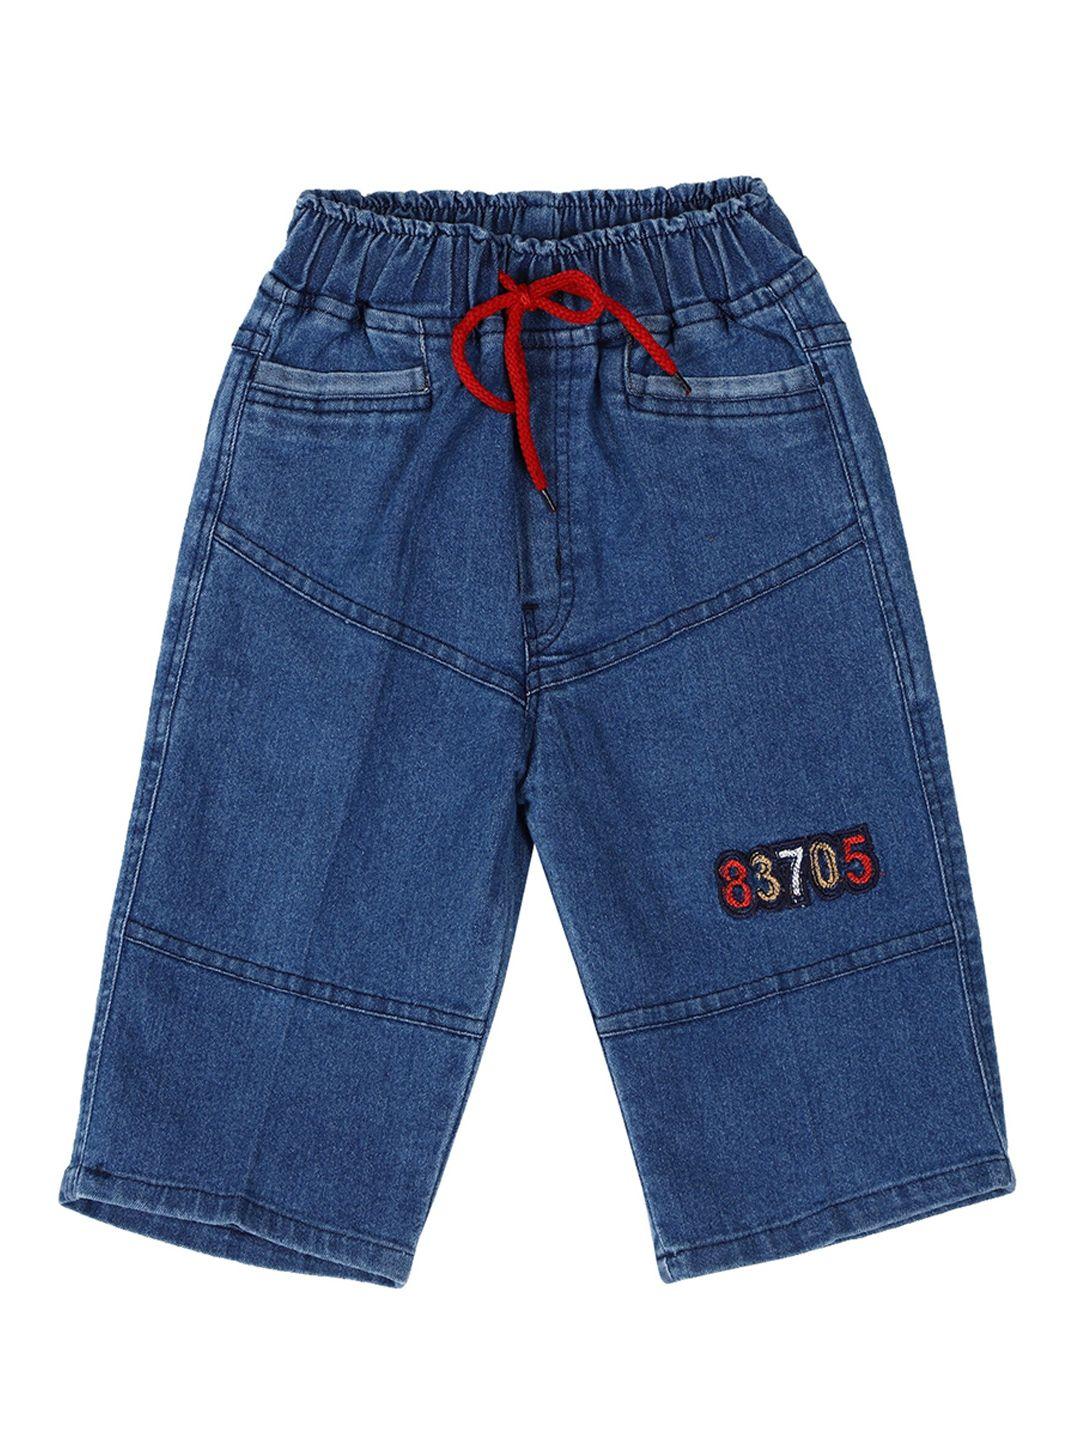 cremlin clothing boys blue denim shorts